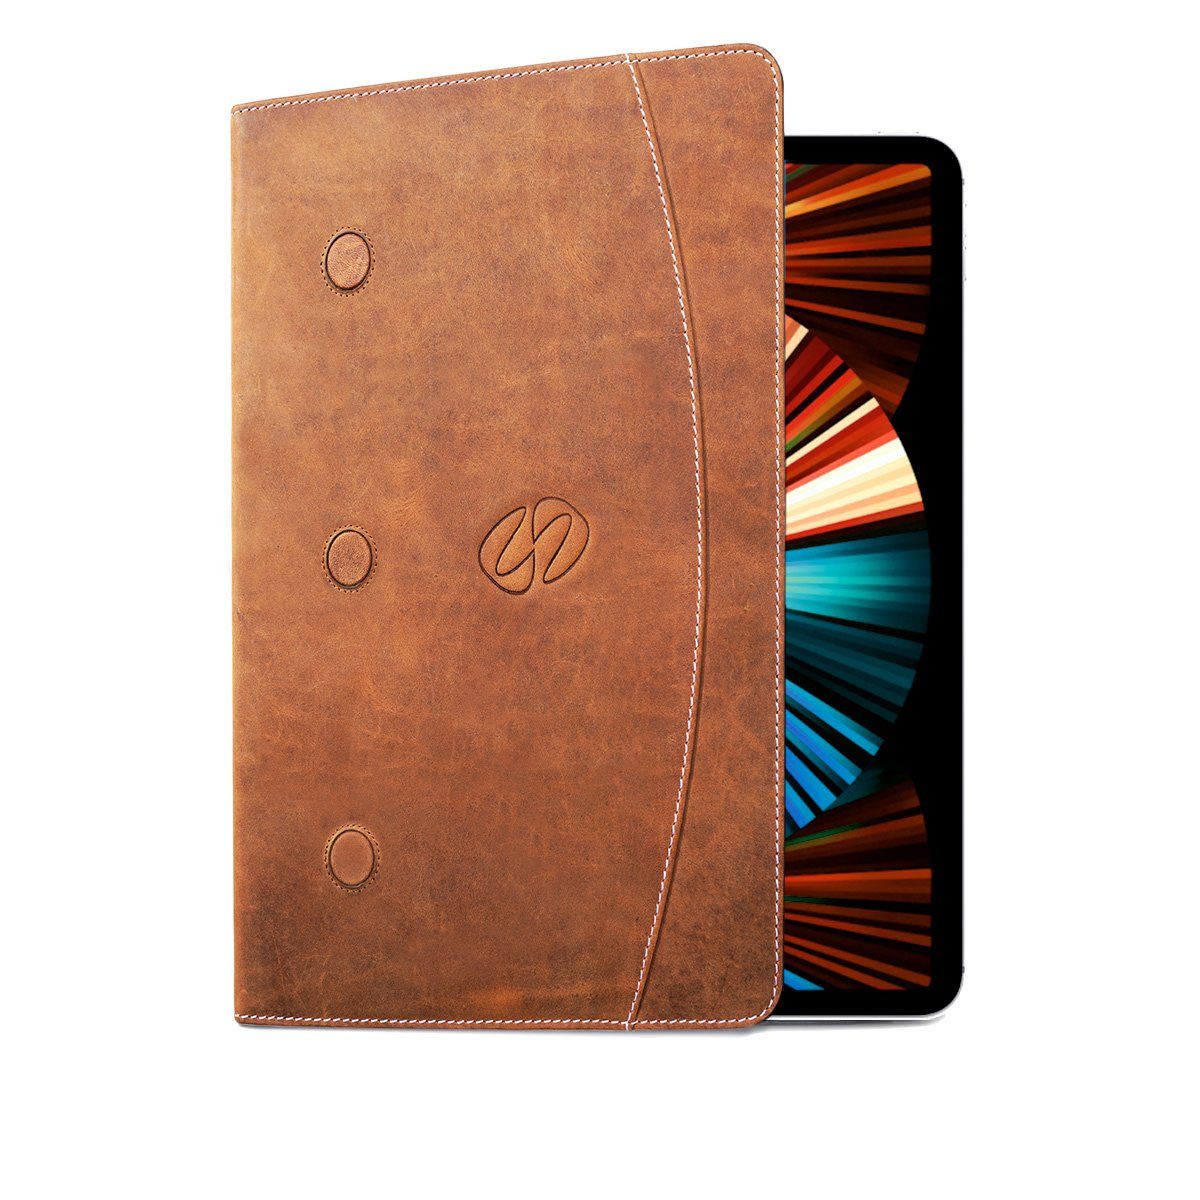 MacCase Premium Leather Gen 5 iPad Pro 12.9 Folio Case - Vintage